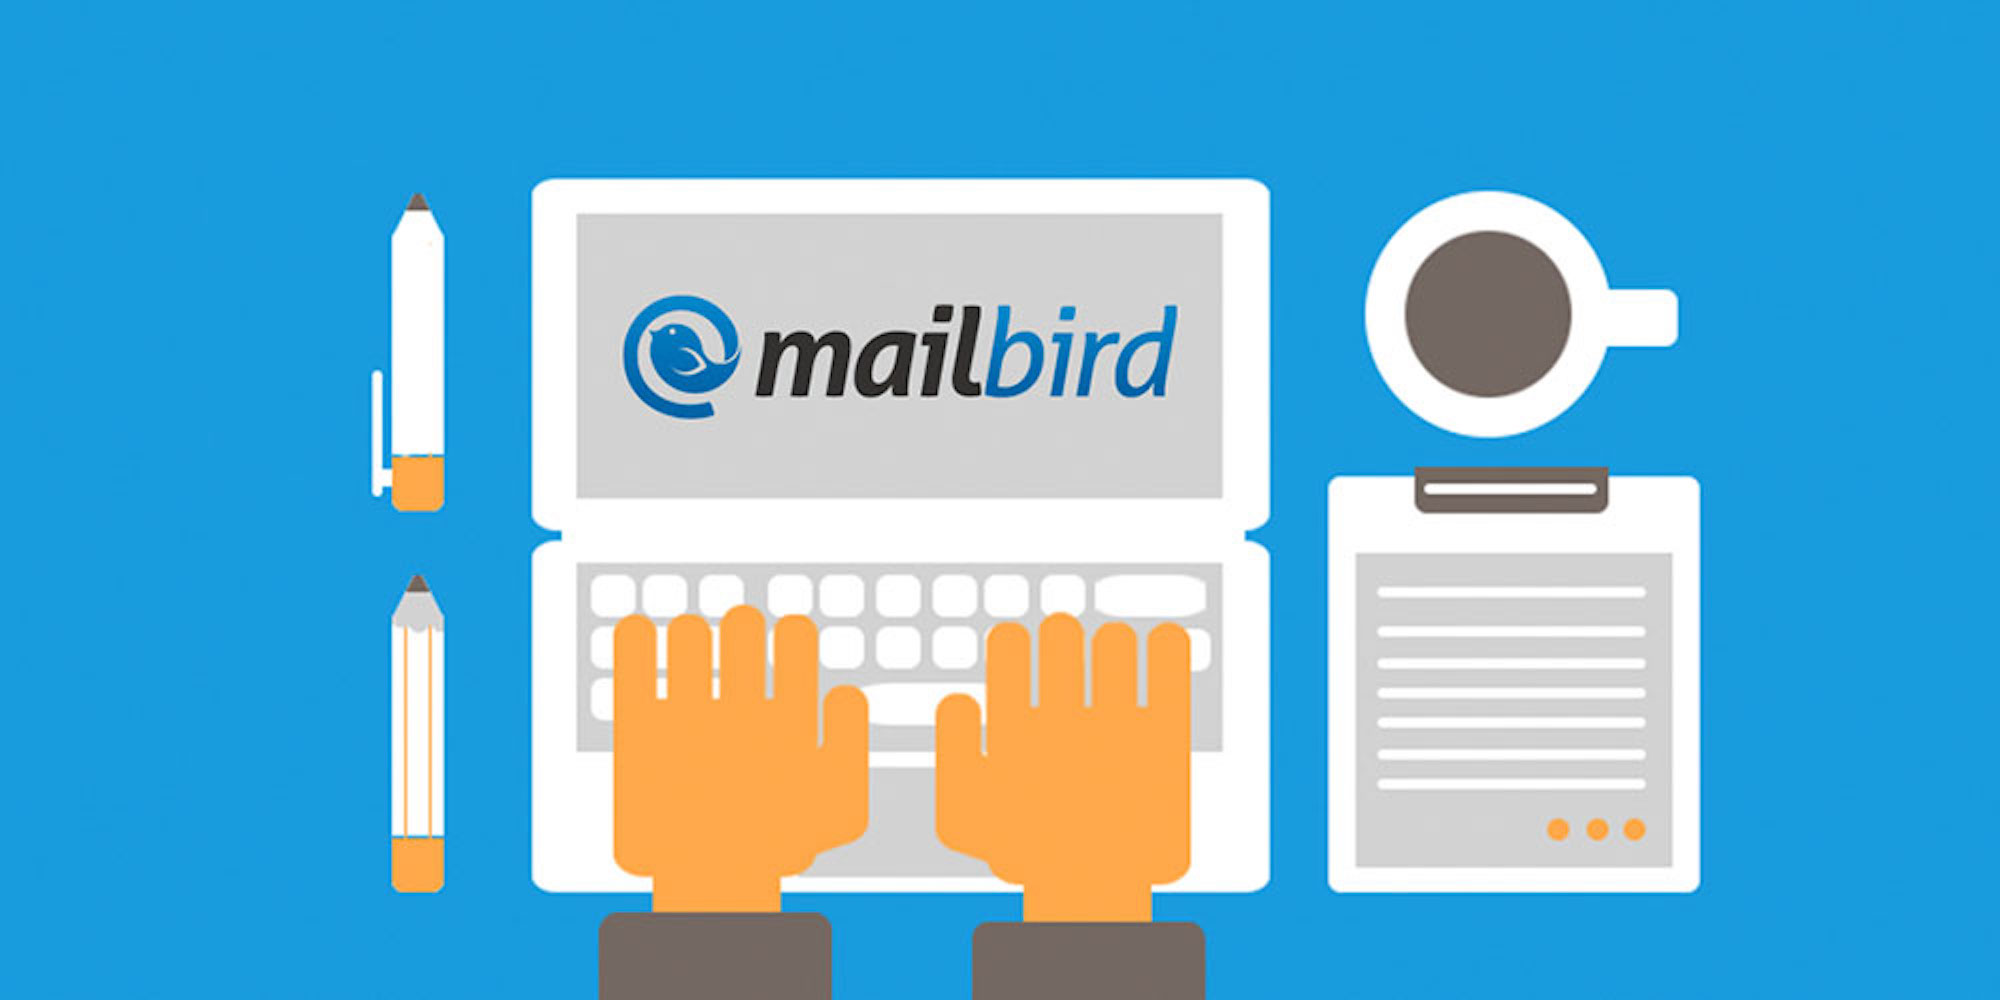 mailbird sort by unread